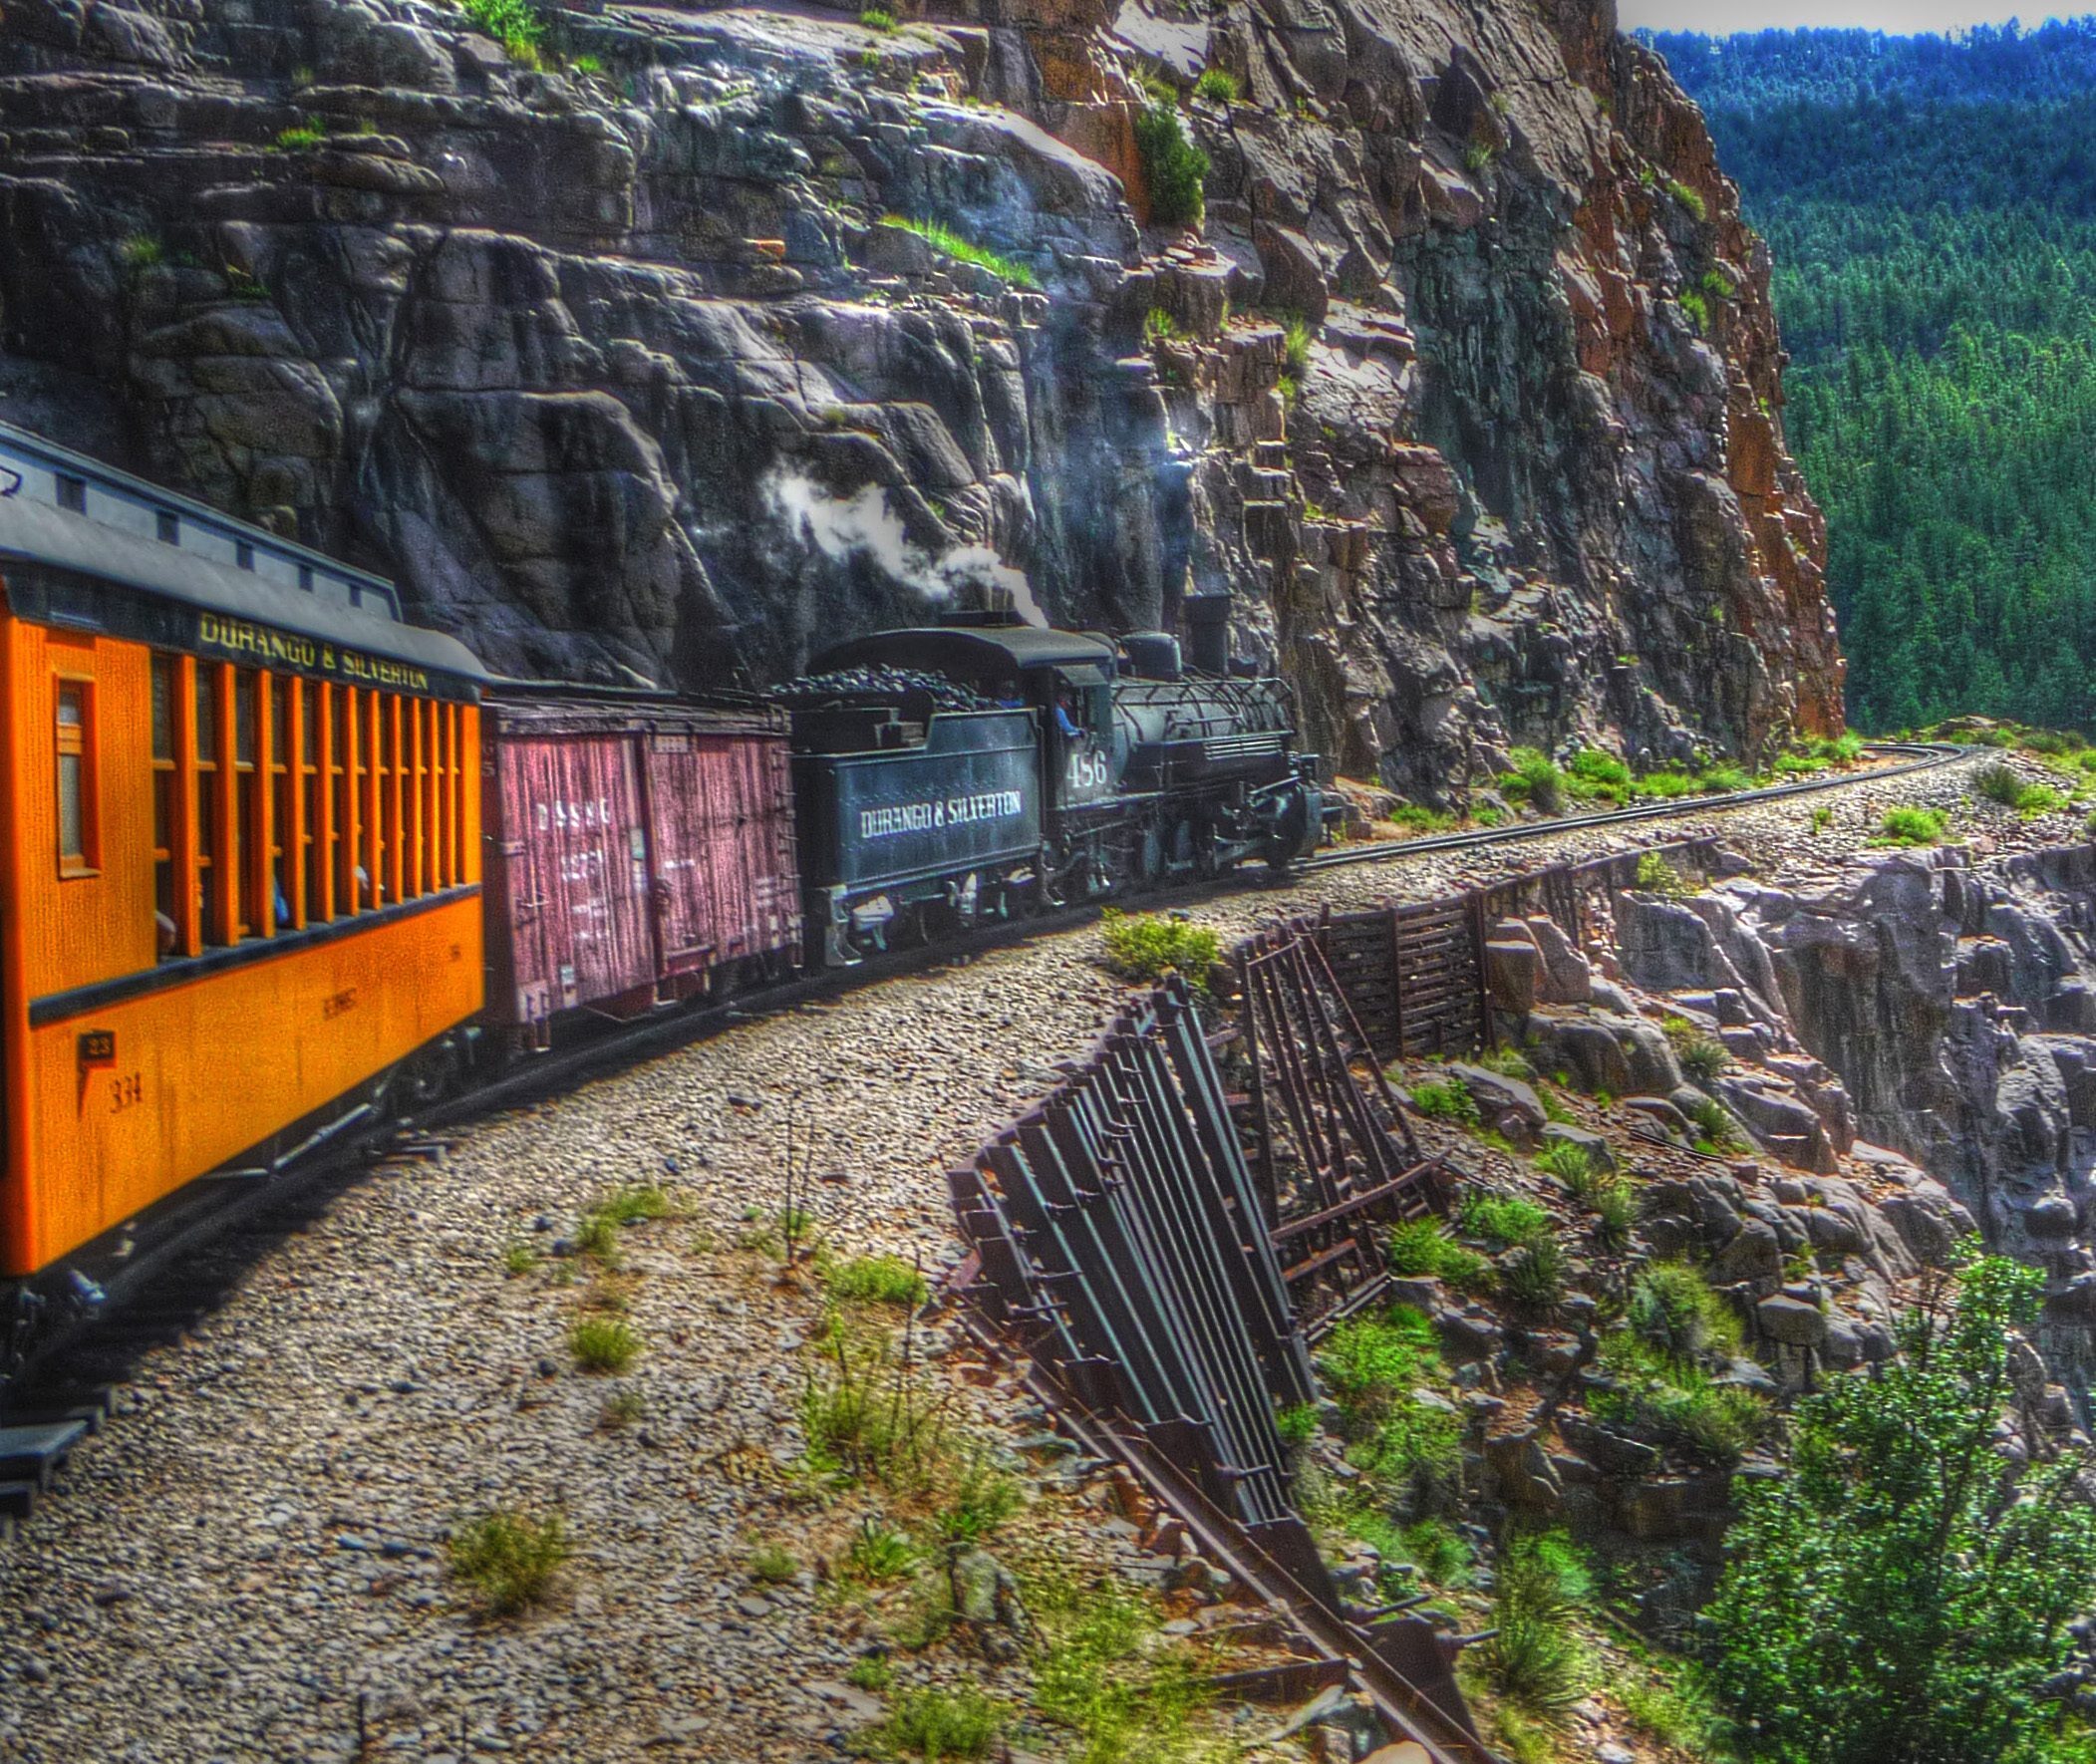 Durango-silverton train photo